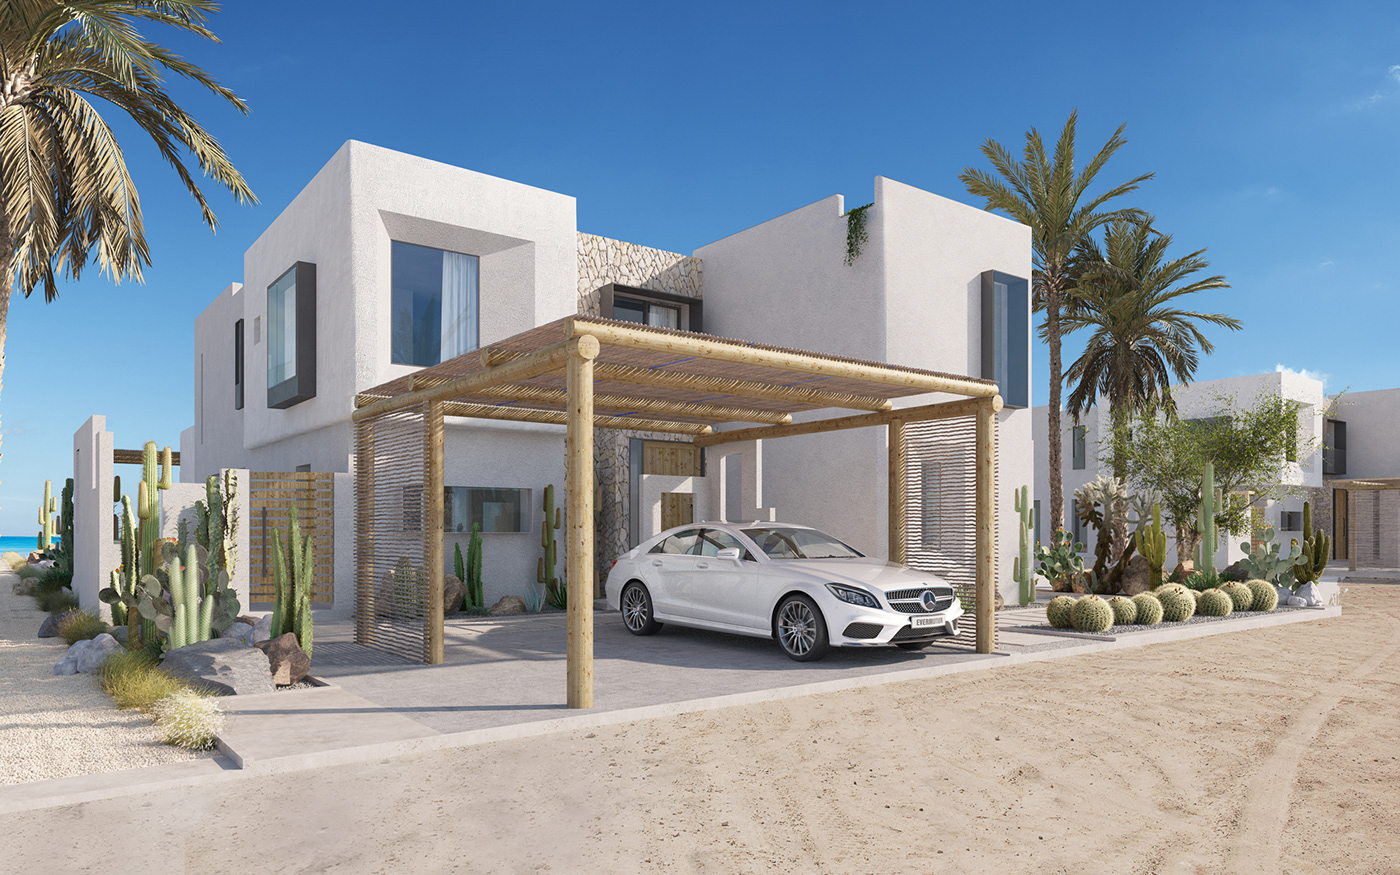 architecture rendering 3dmax visualization coastal Villa design Interior Landscape postproduction